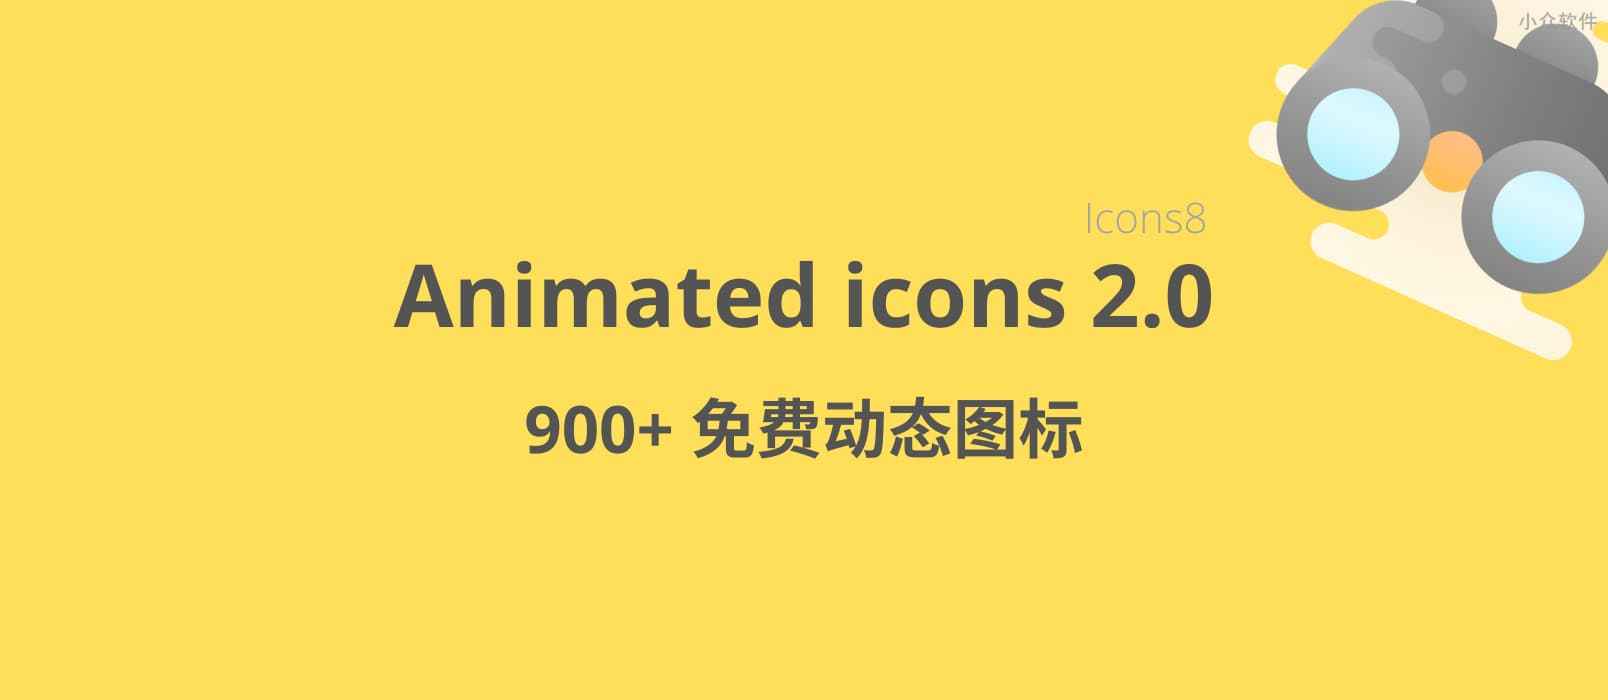 Icons8 发布 Animated icons 2.0，900+ 会动的图标，免费可商用 1